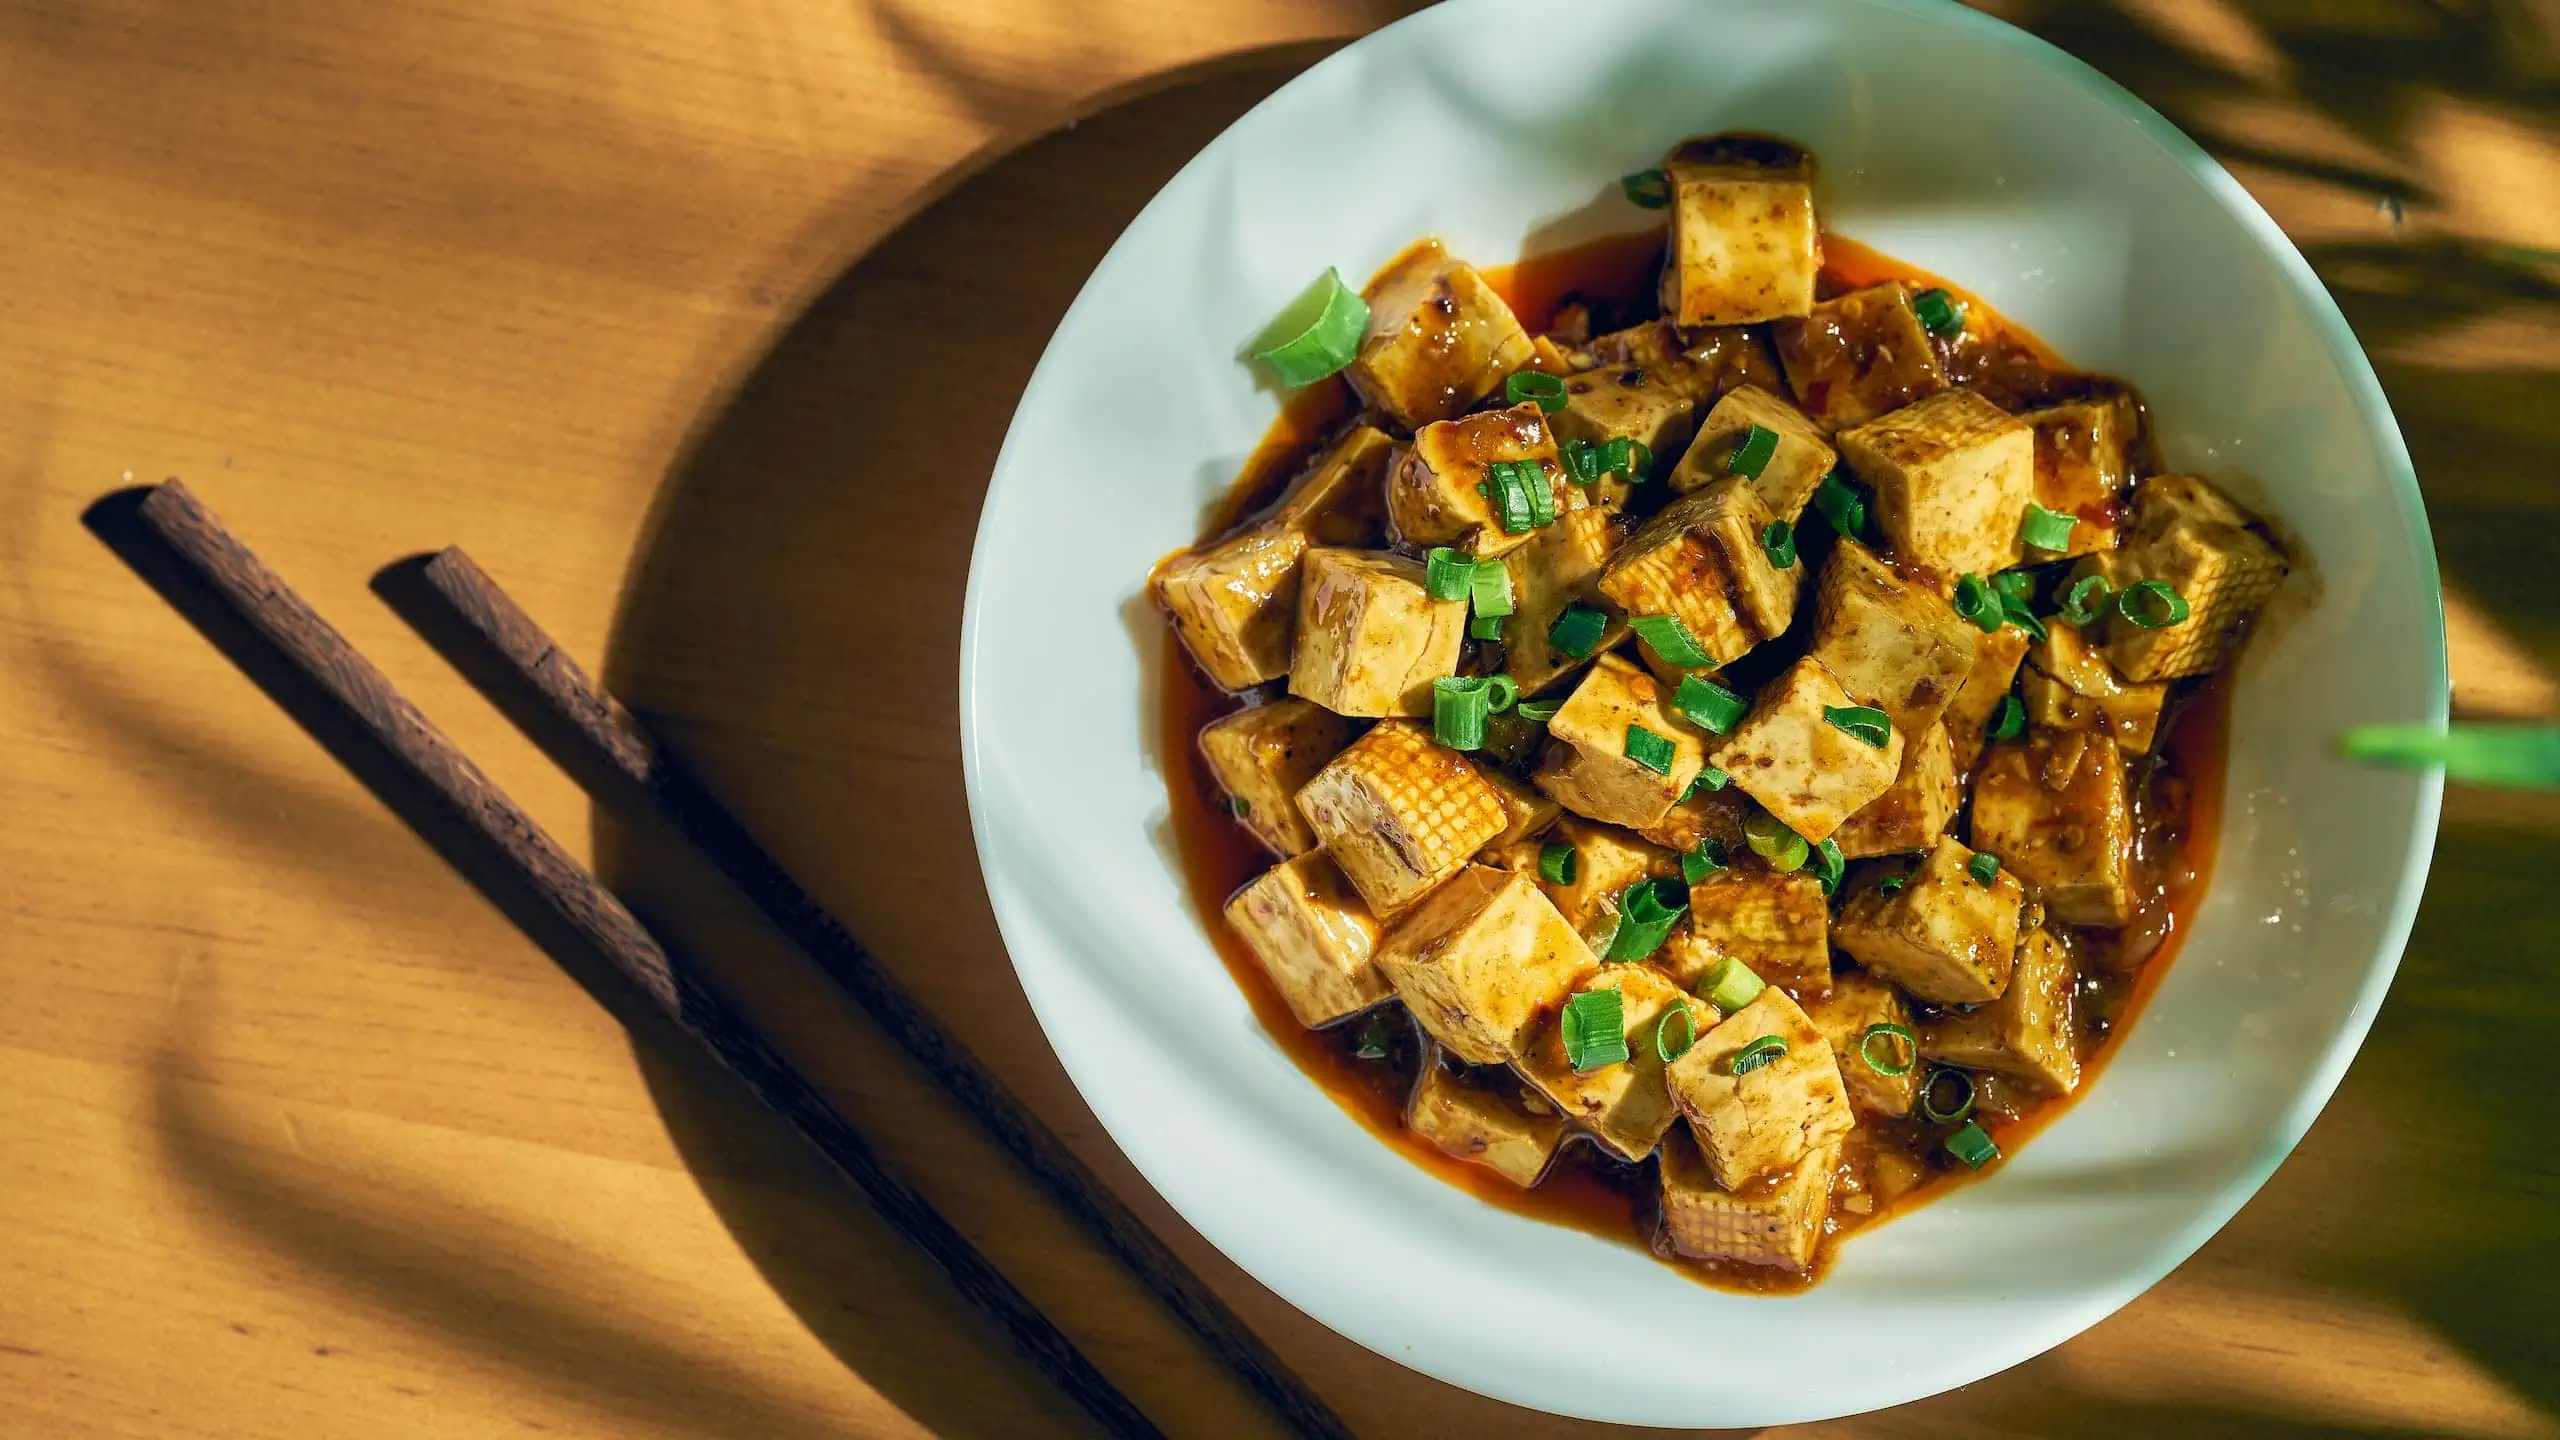 Our tofu Lutong Pinoy recipe